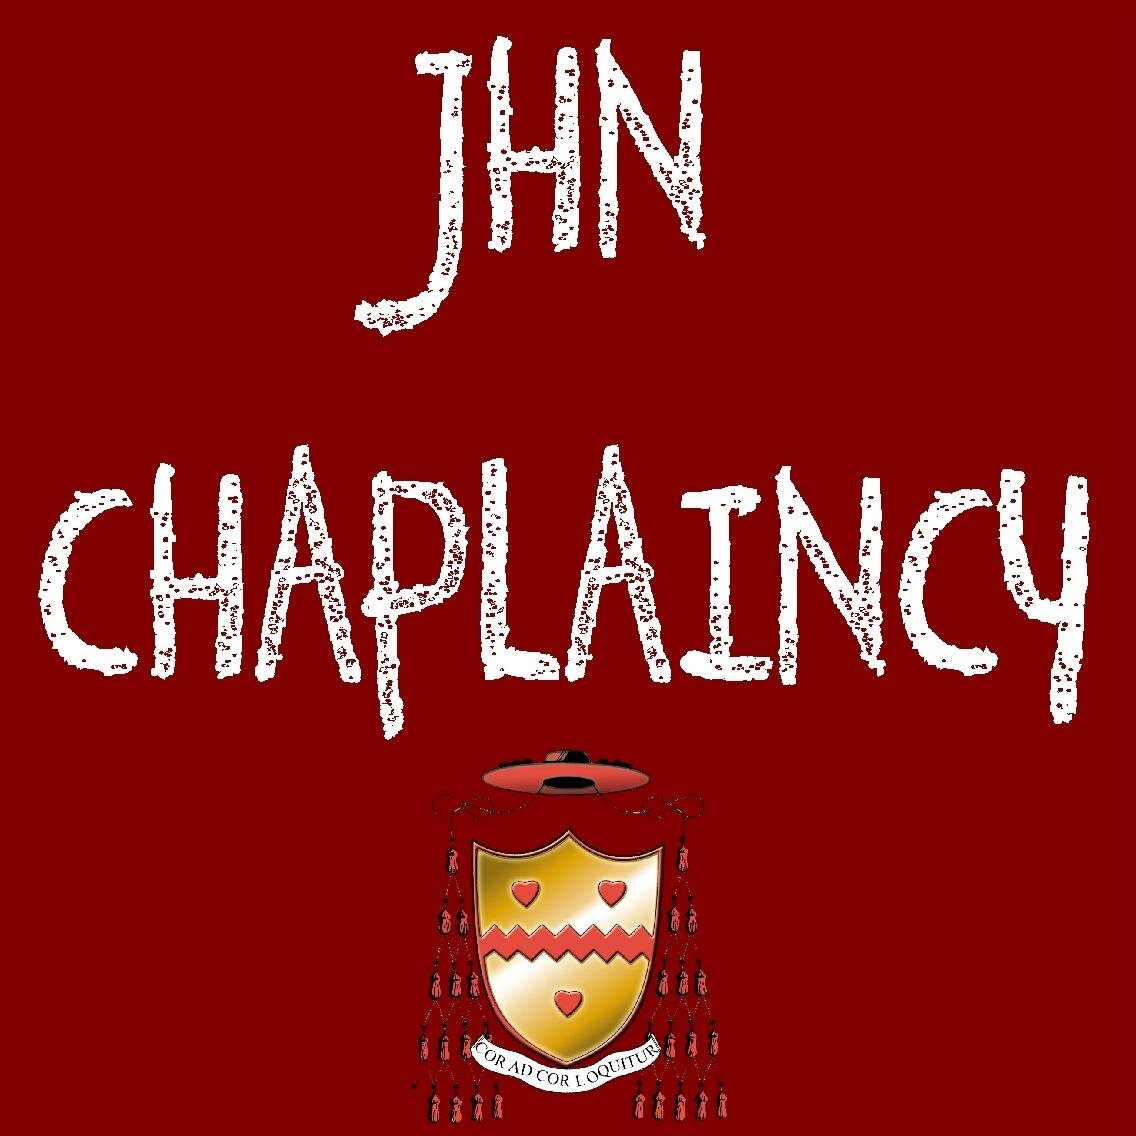 All the latest news from the Chaplaincy Team at The Saint John Henry Newman Catholic School. #coradcor #heartspeakstoheart